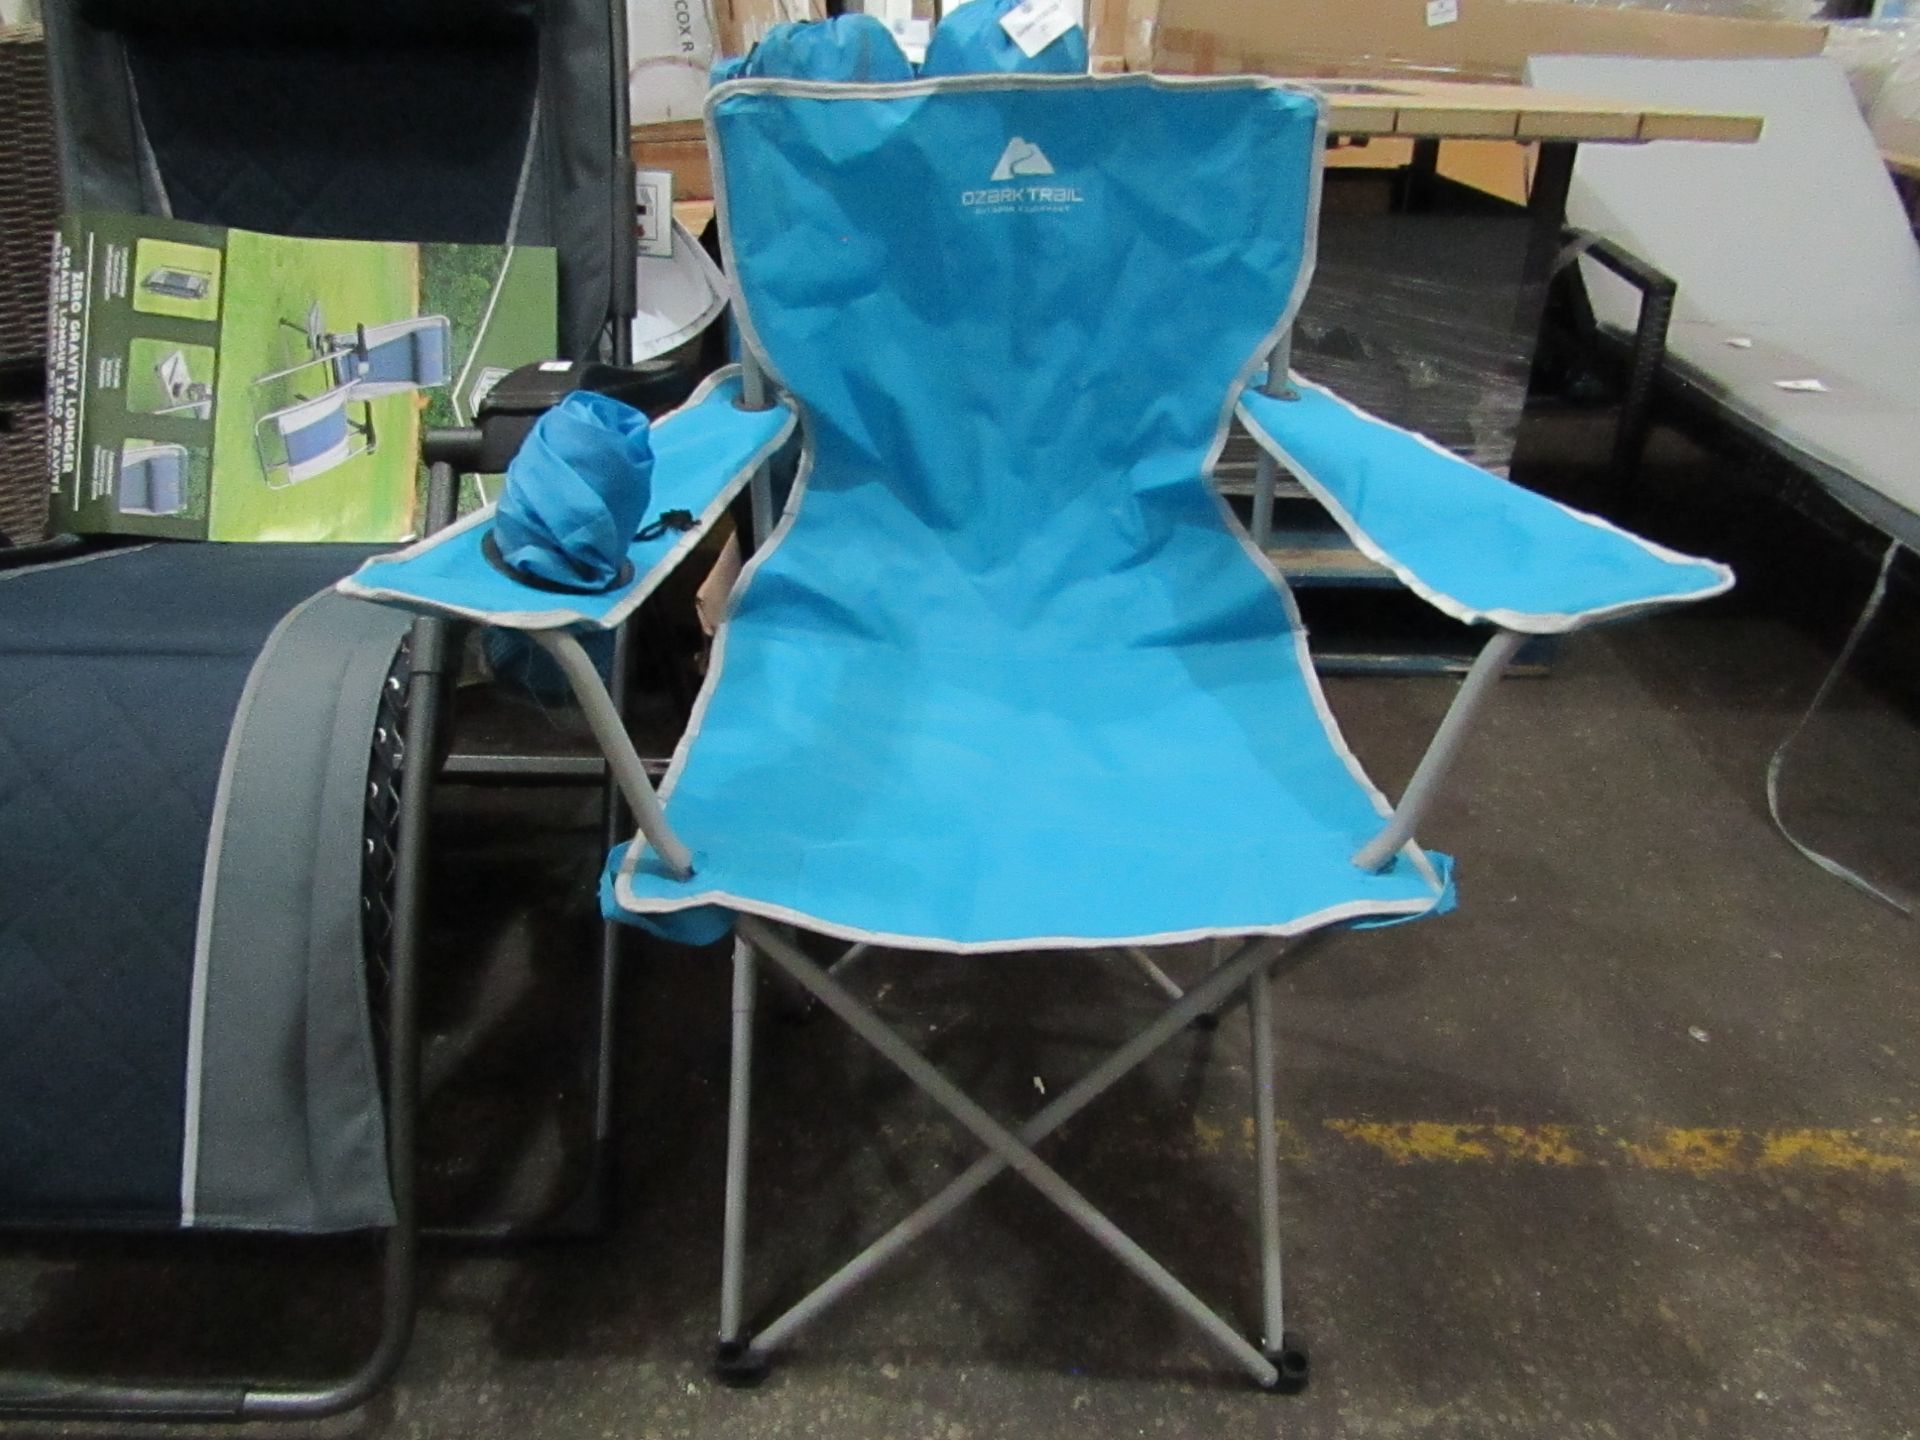 Ozark Trail - Blue Folding Camping Chair - New & Unused.